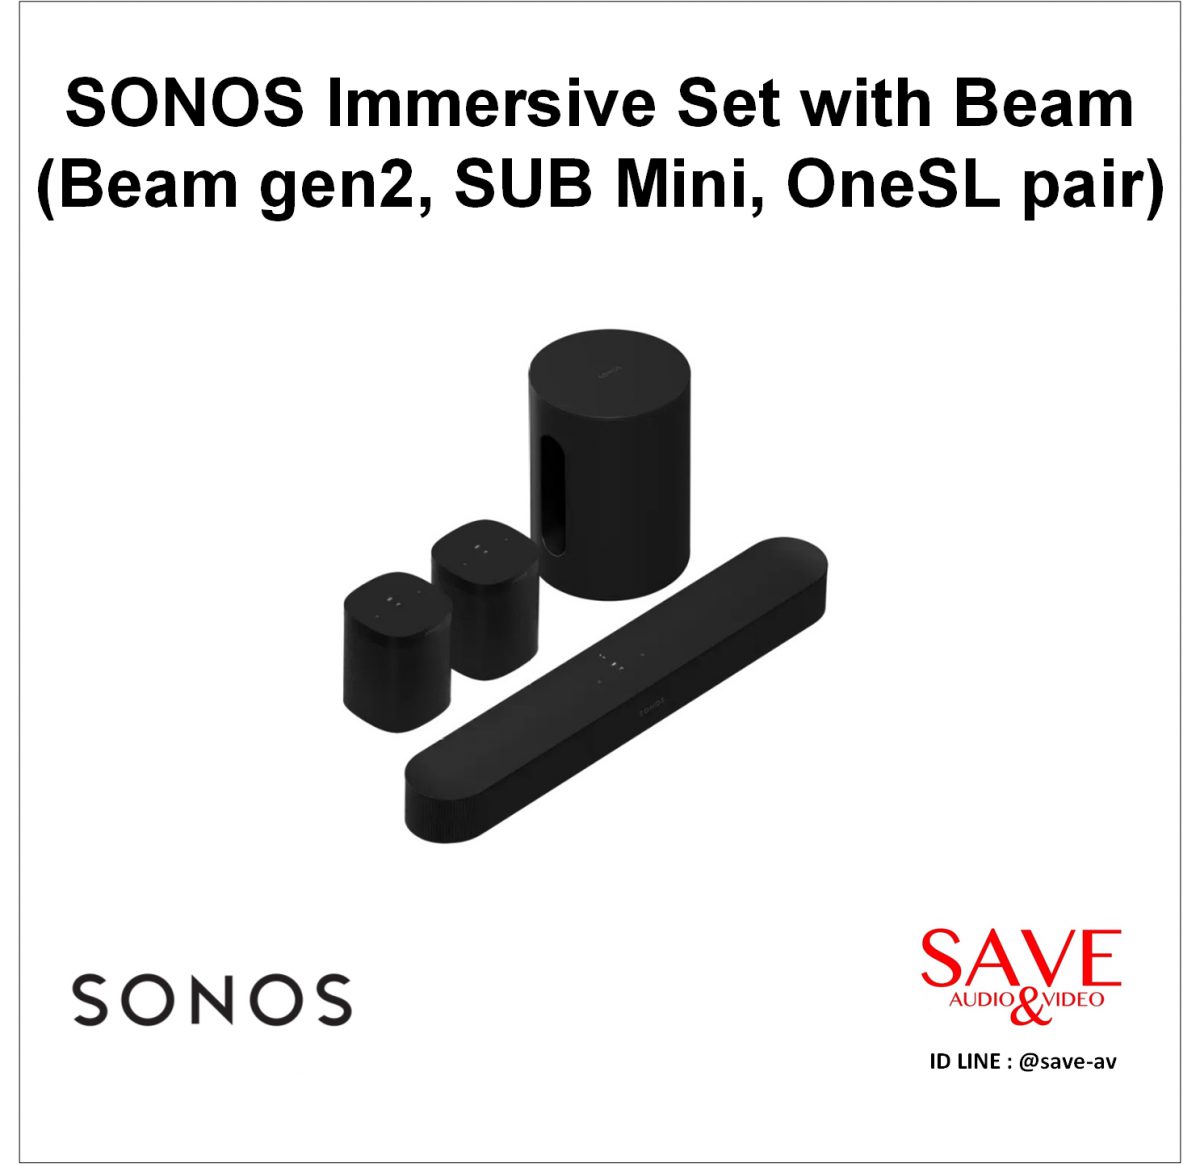 Sonos Thailand SONOS Immersive Set with Beam (Beam gen2, SUB Mini, OneSL pair)